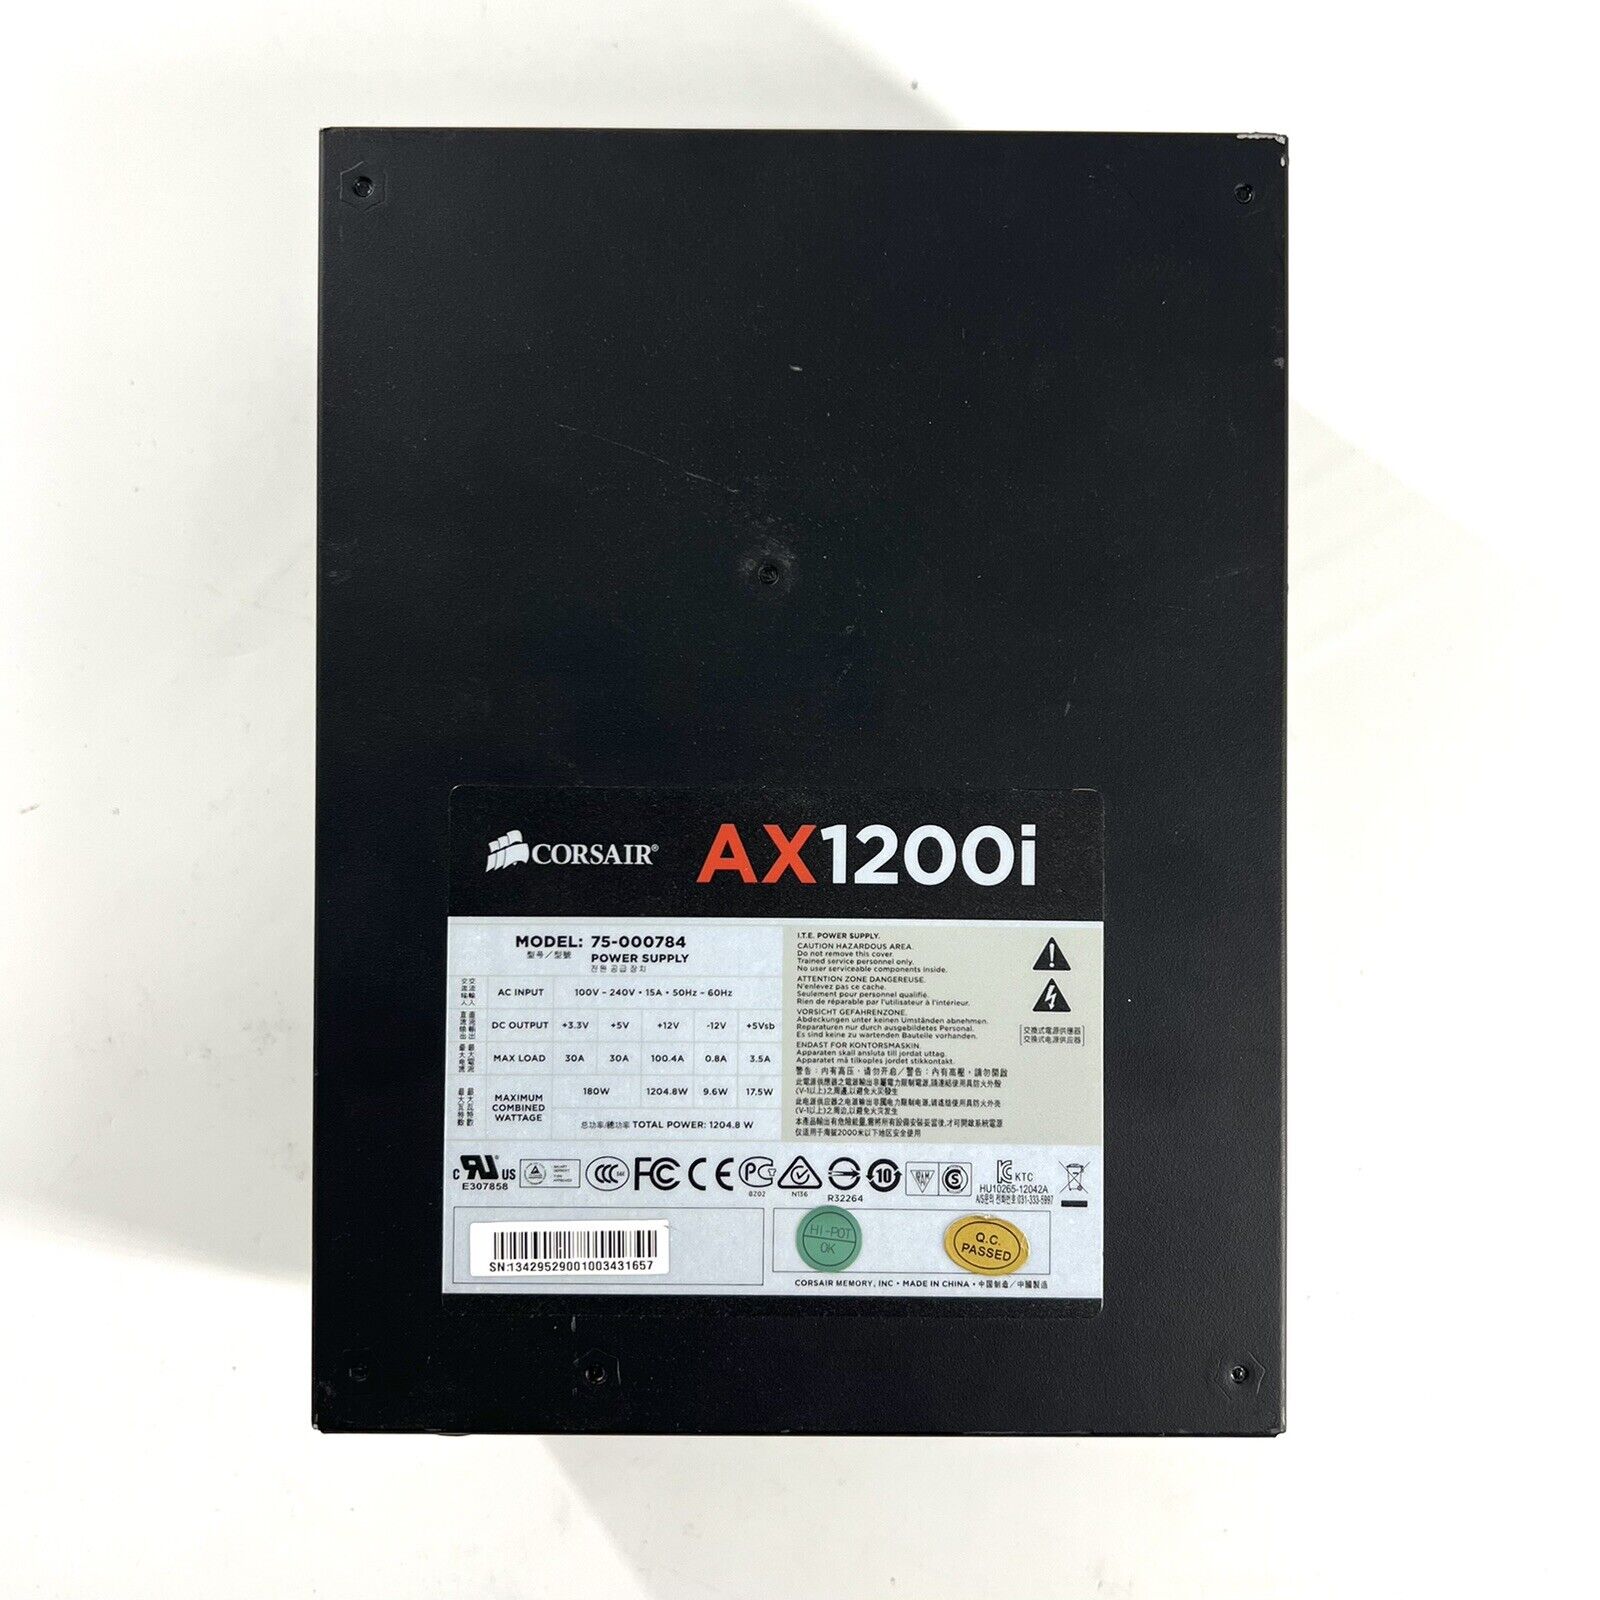 Corsair AX1200i 1200W 80+ Platinum ATX PSU with CABLES